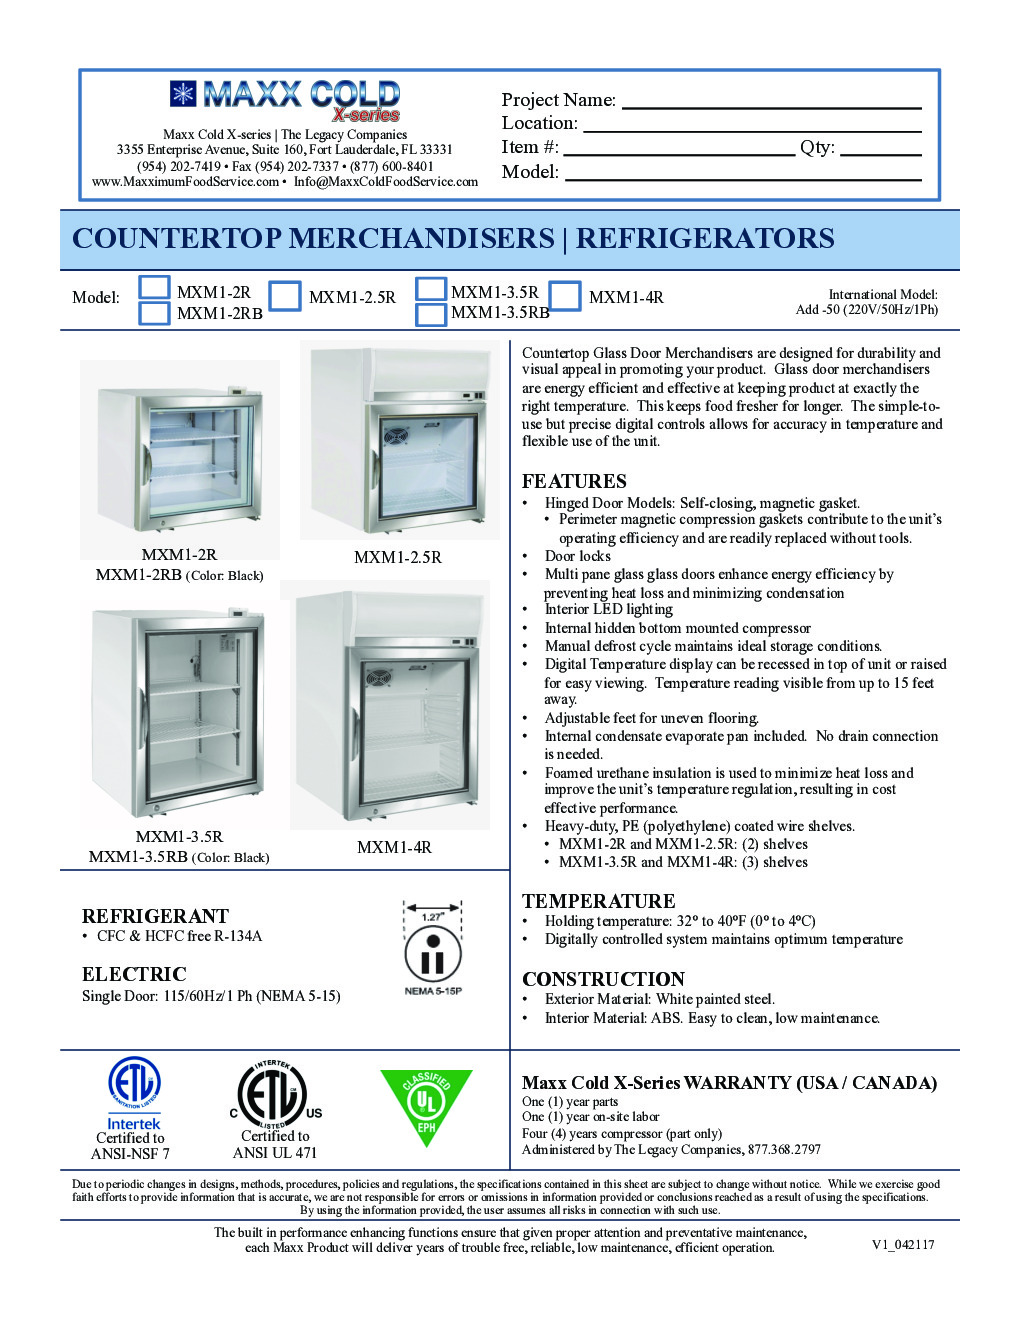 Maxximum MXM1-2.5R Countertop Merchandiser Refrigerator